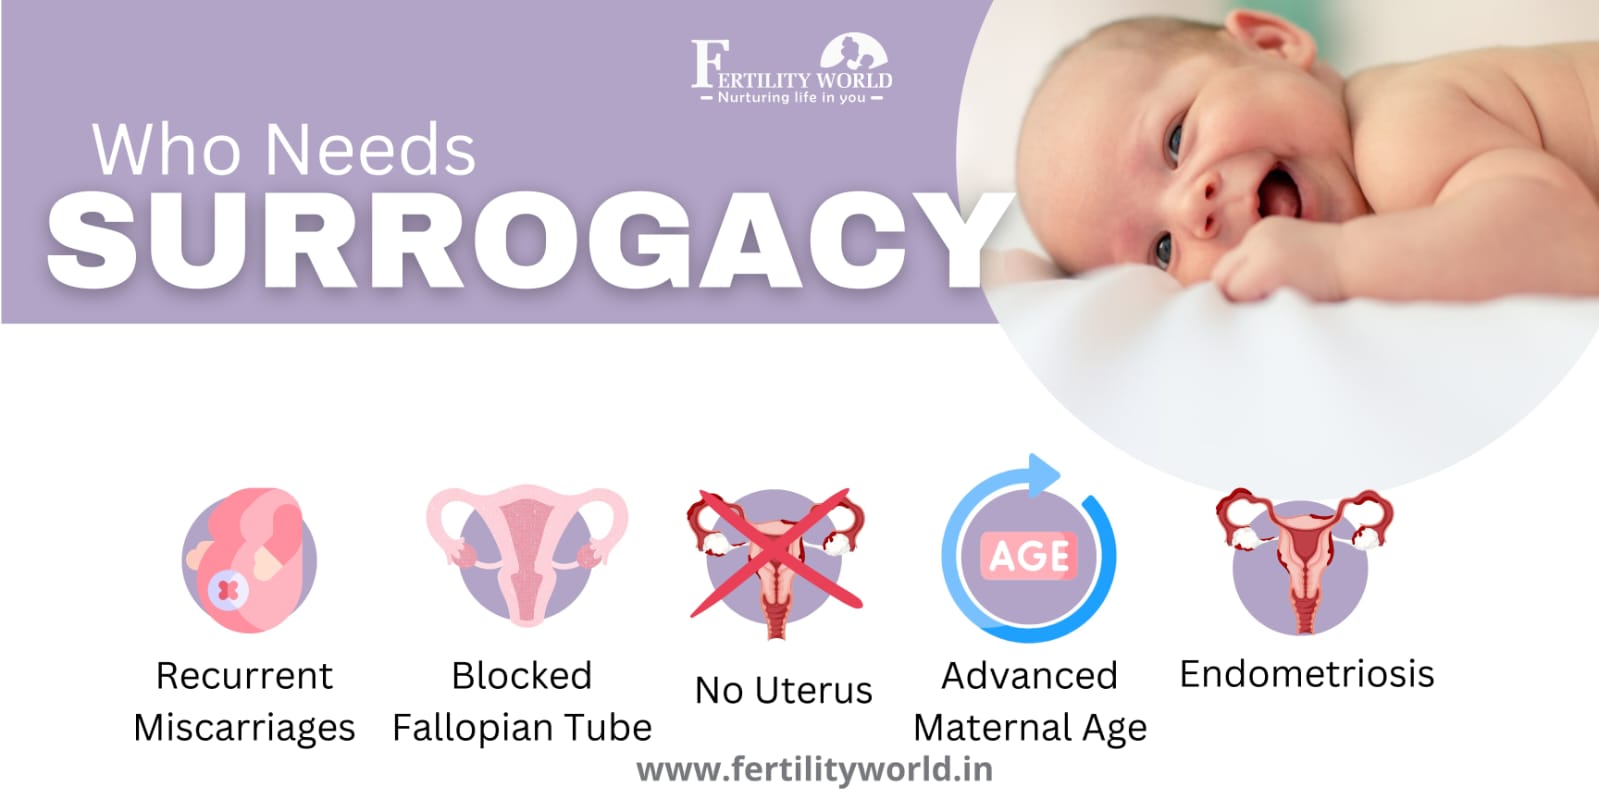 Who needs the surrogacy treatments?